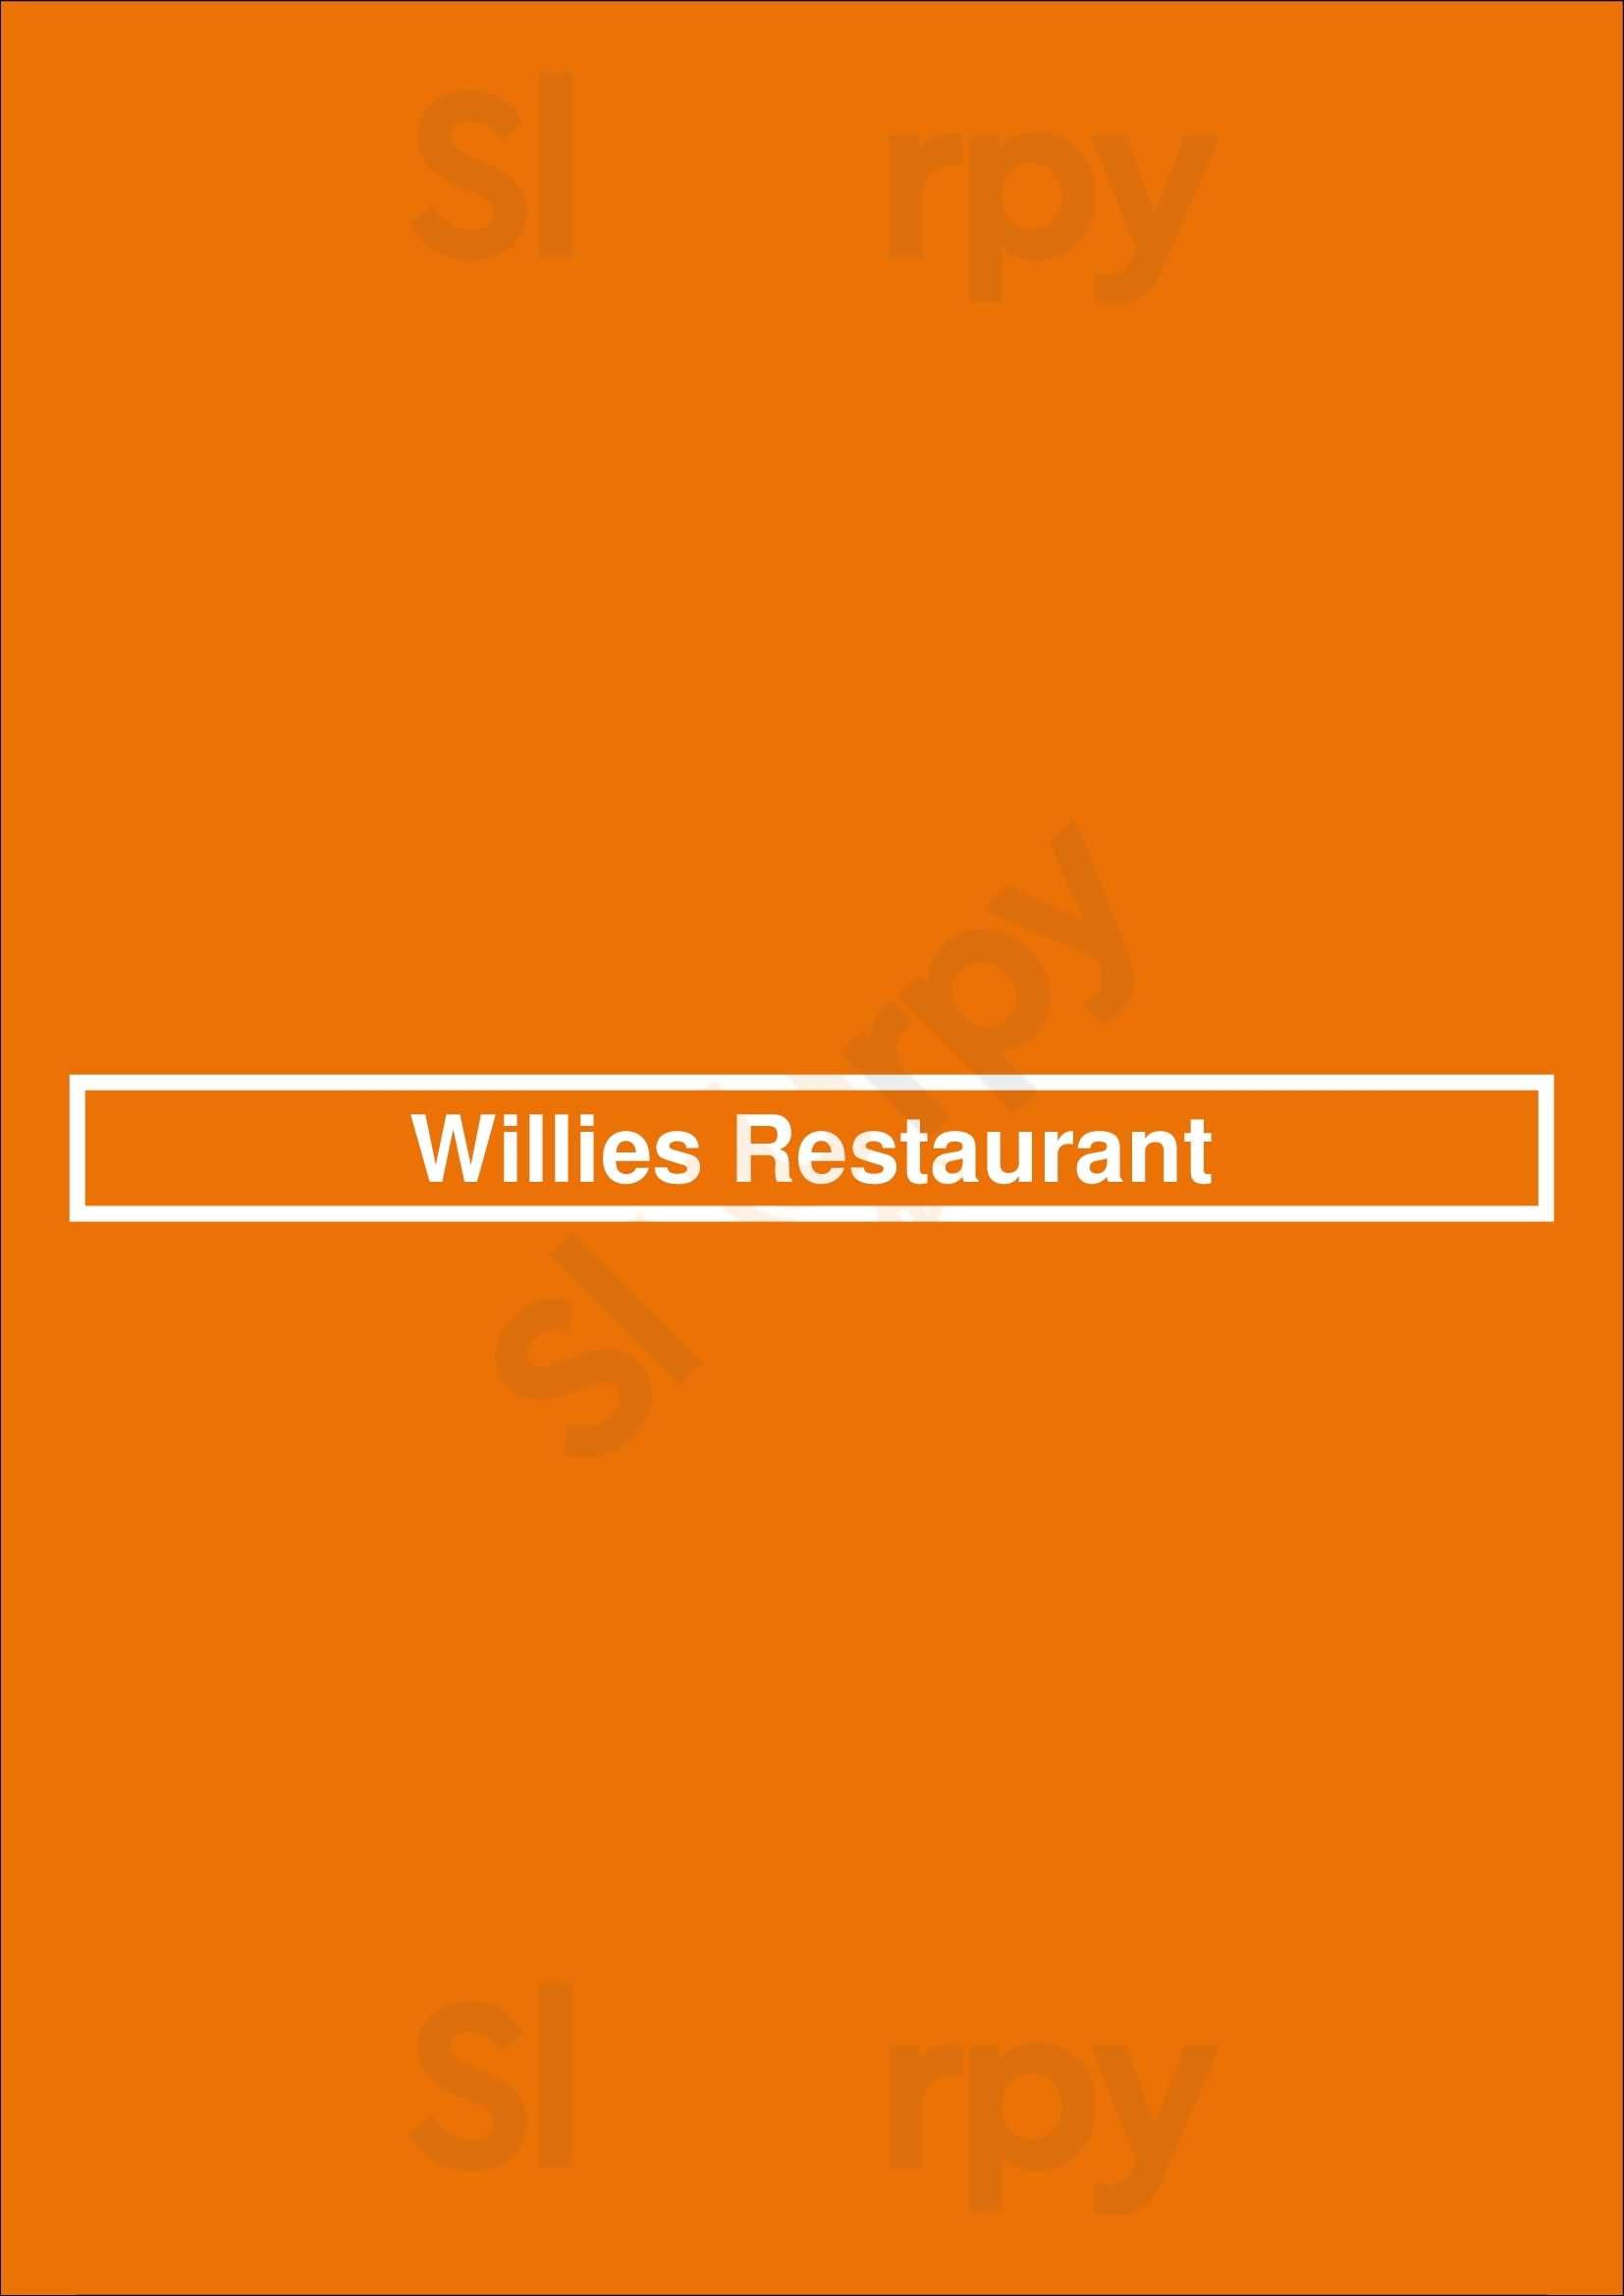 Willies Restaurant Vilamoura  Menu - 1